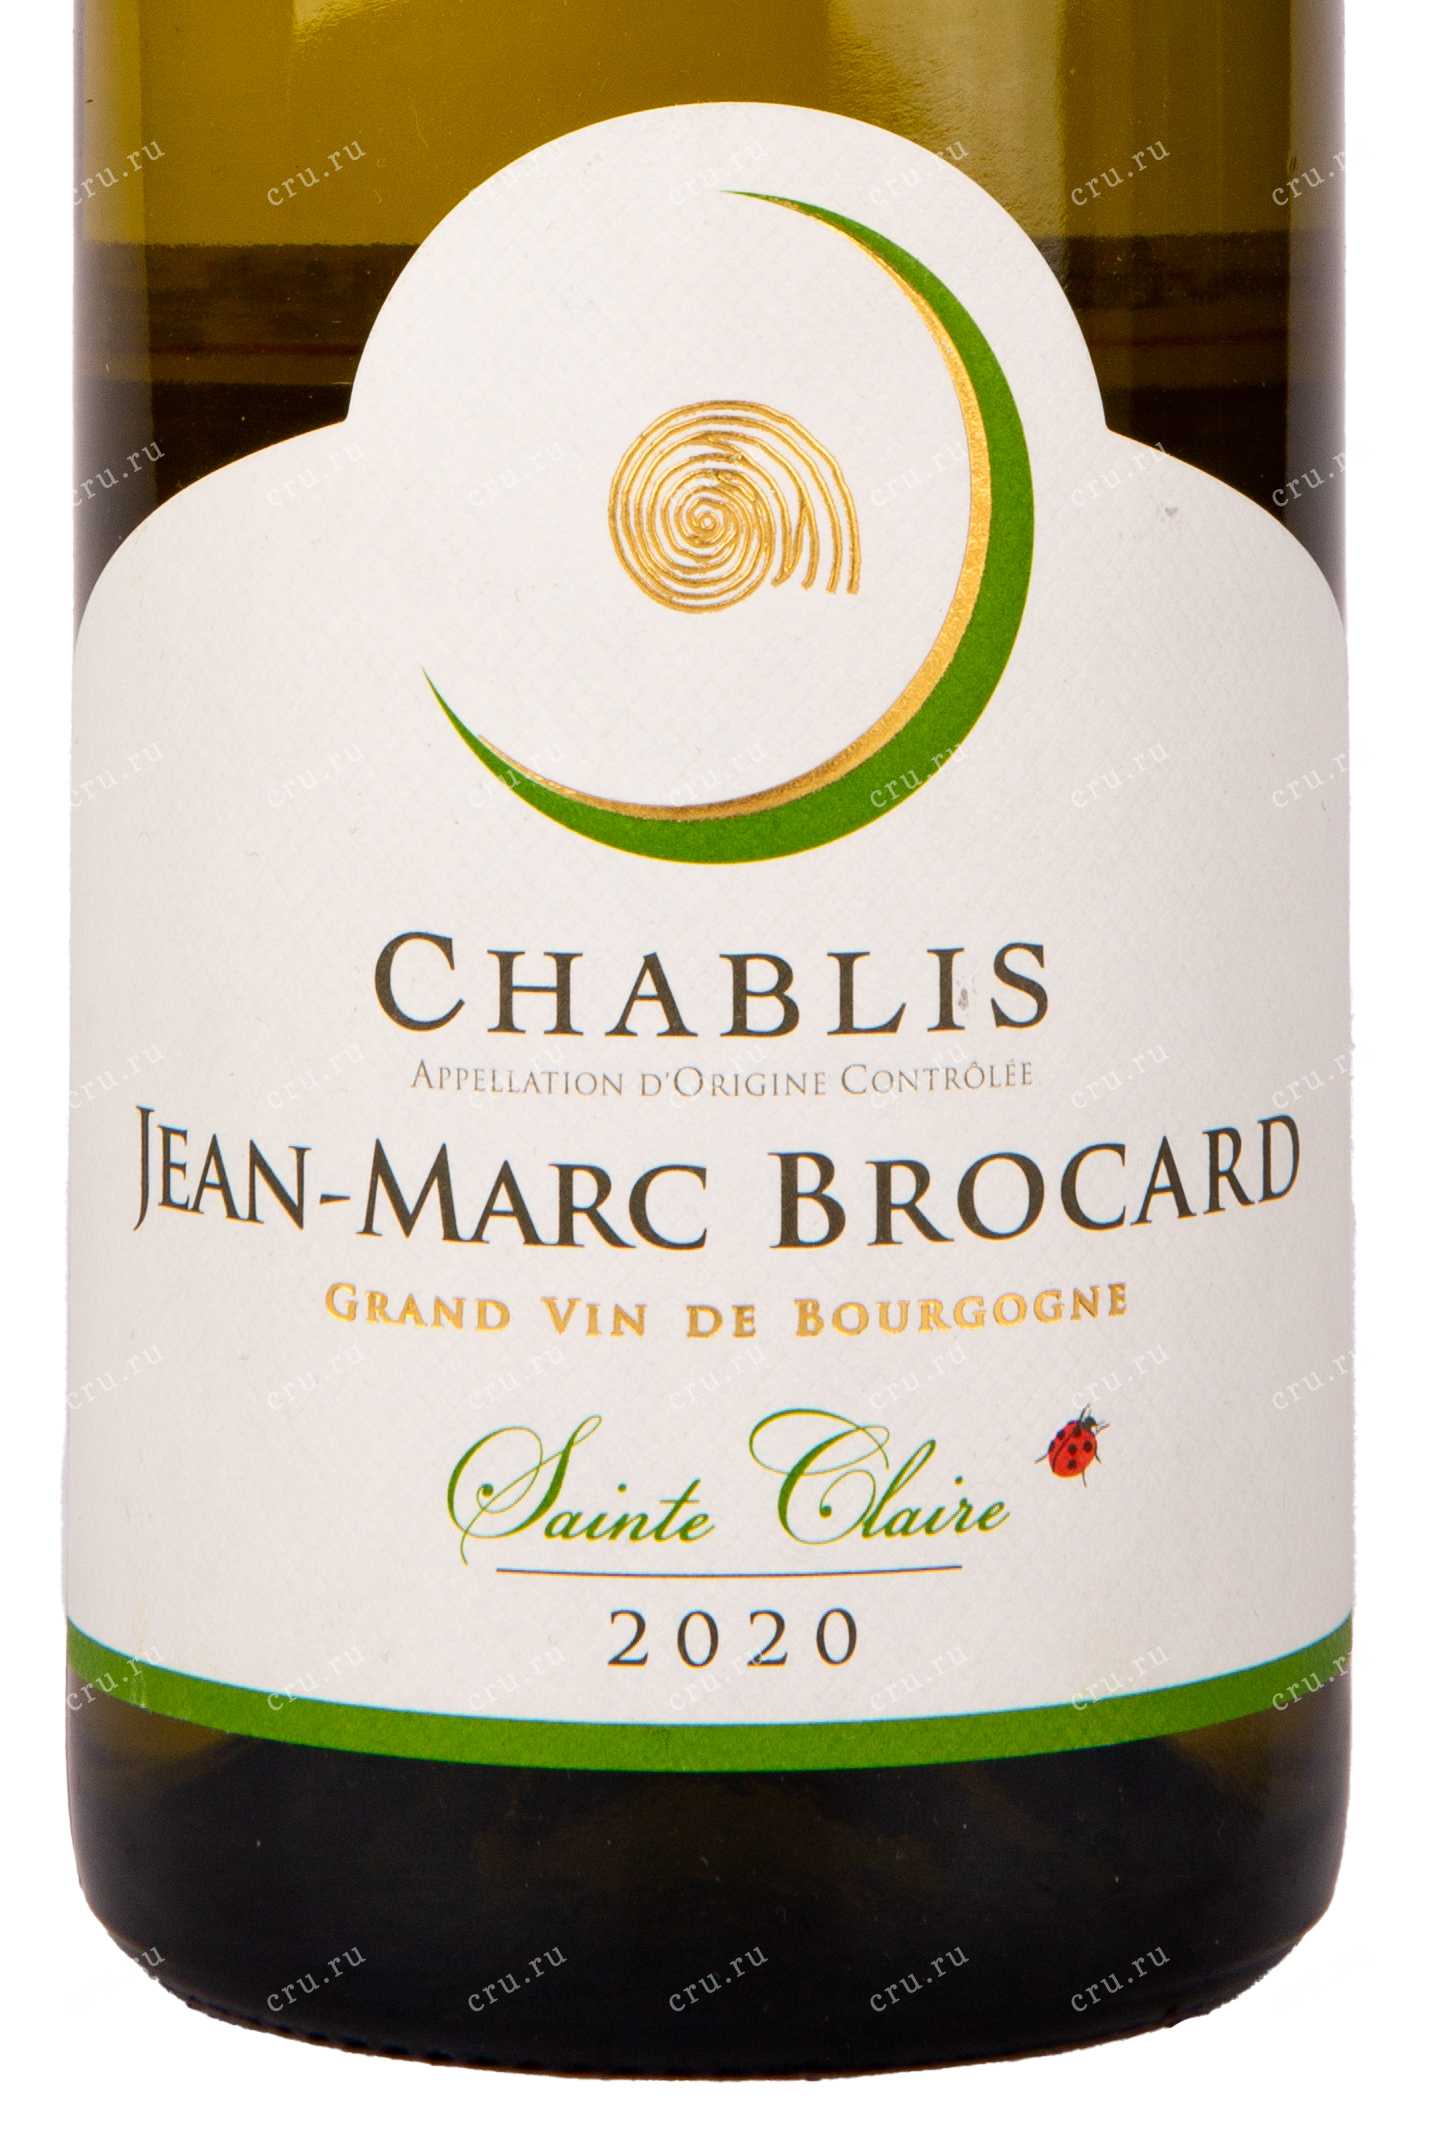 Jean-marc brocard in chablis | tomas's wine blog